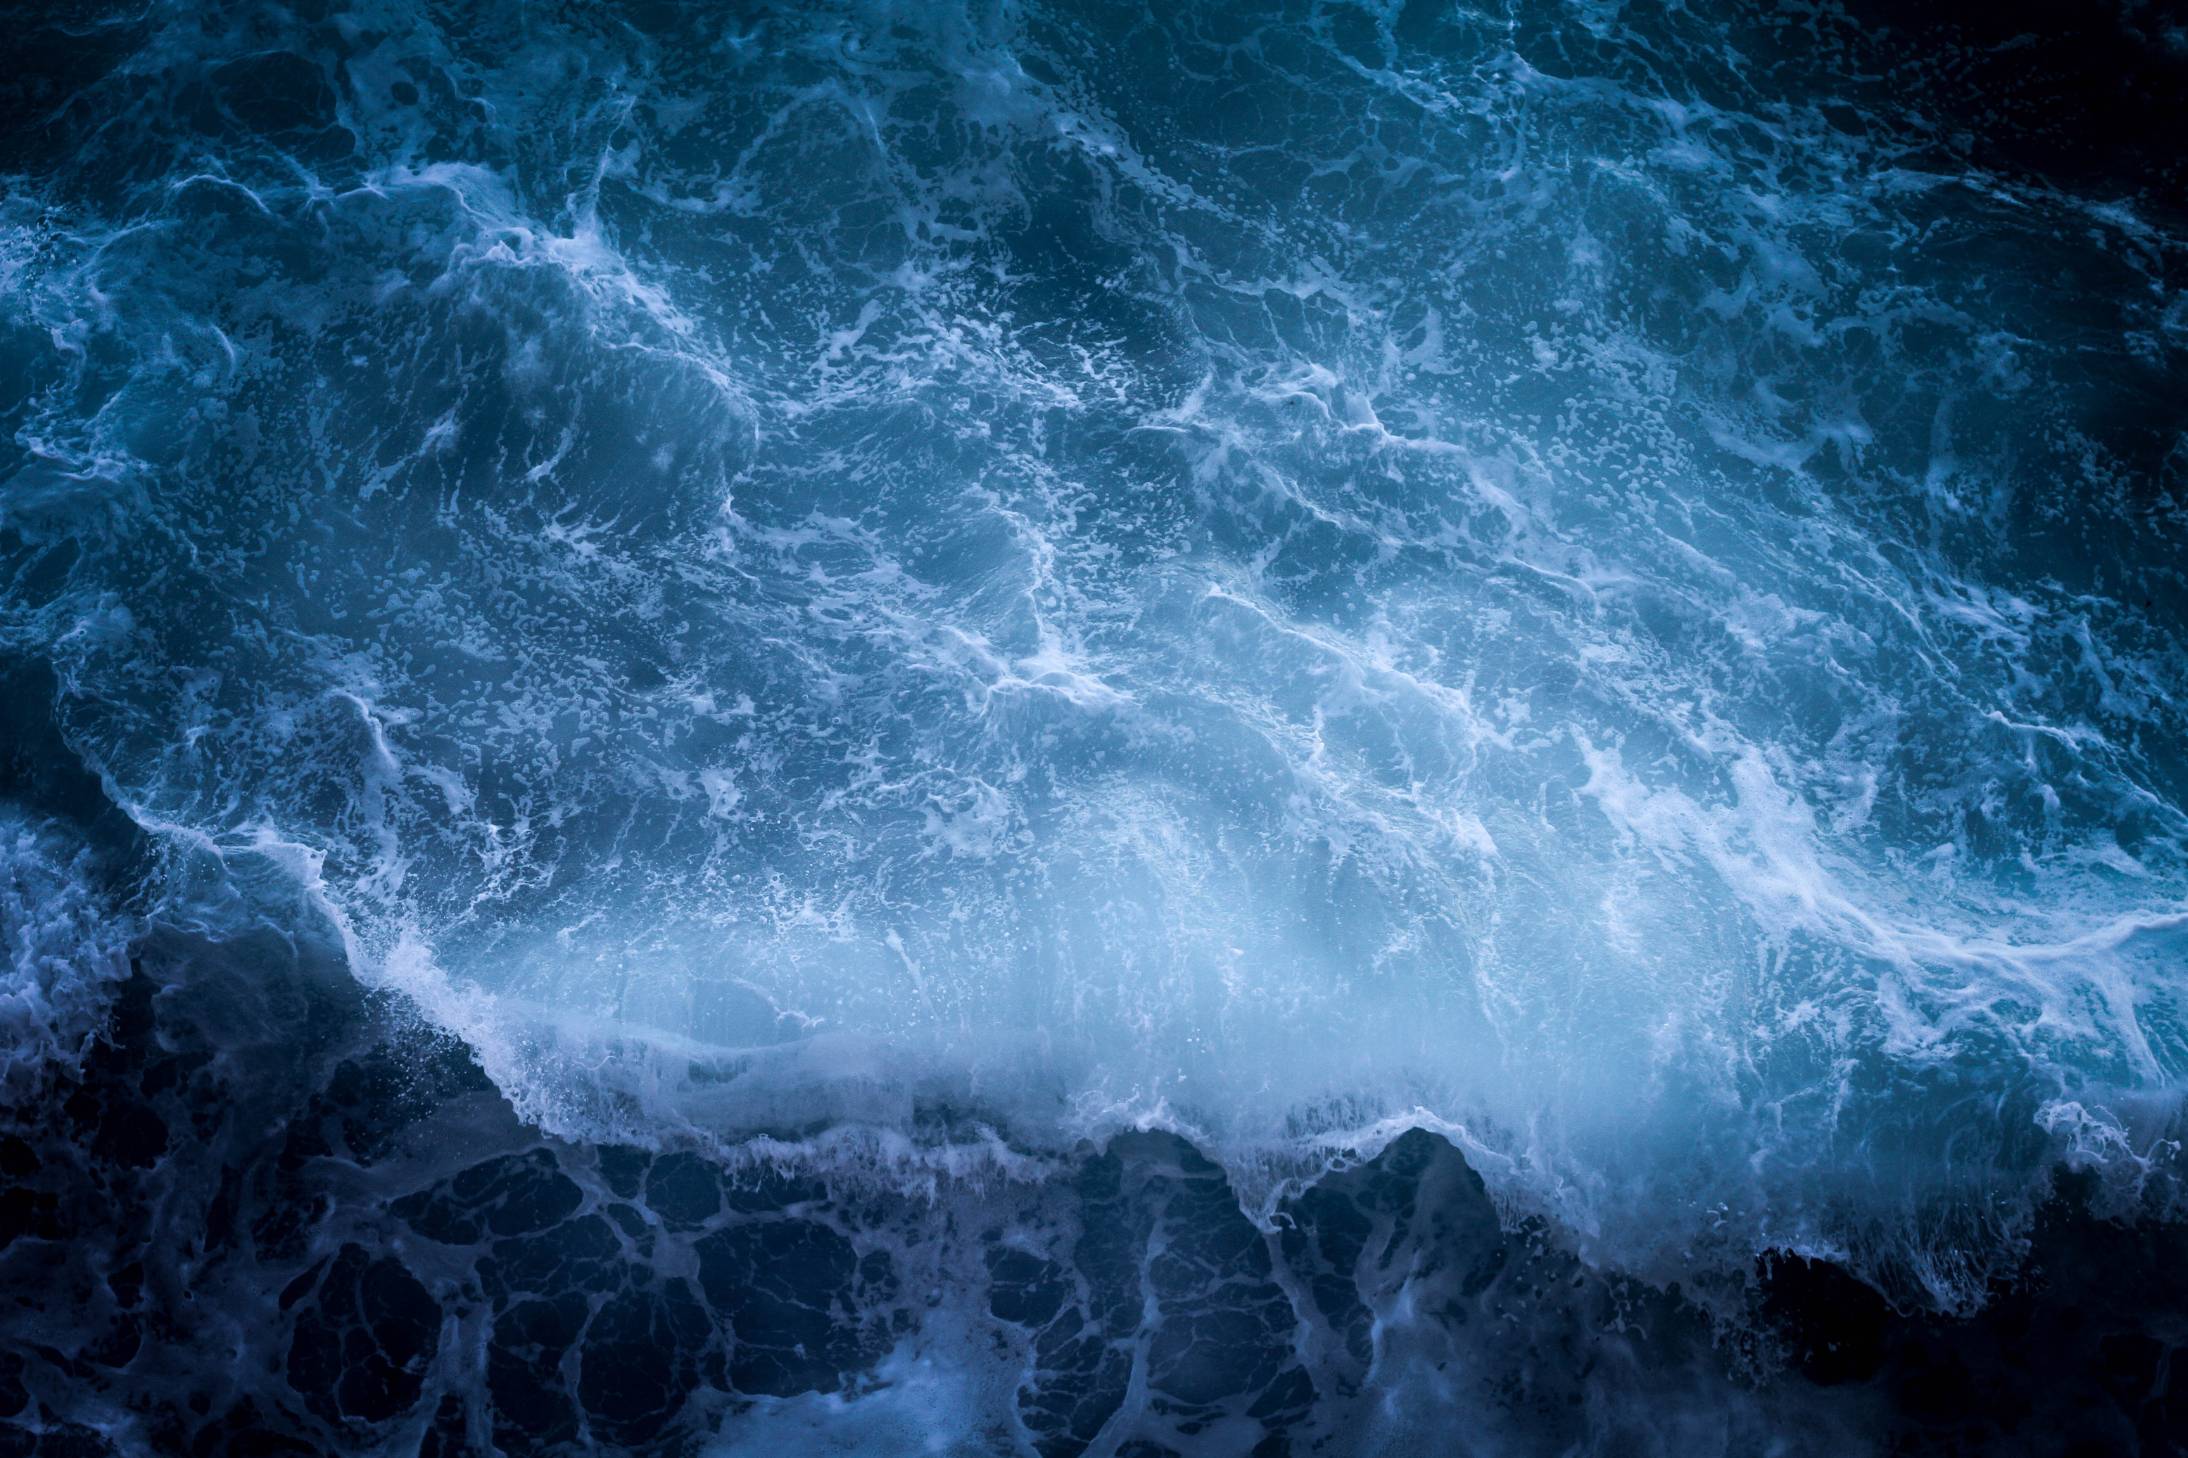 A photograph of waves crashing